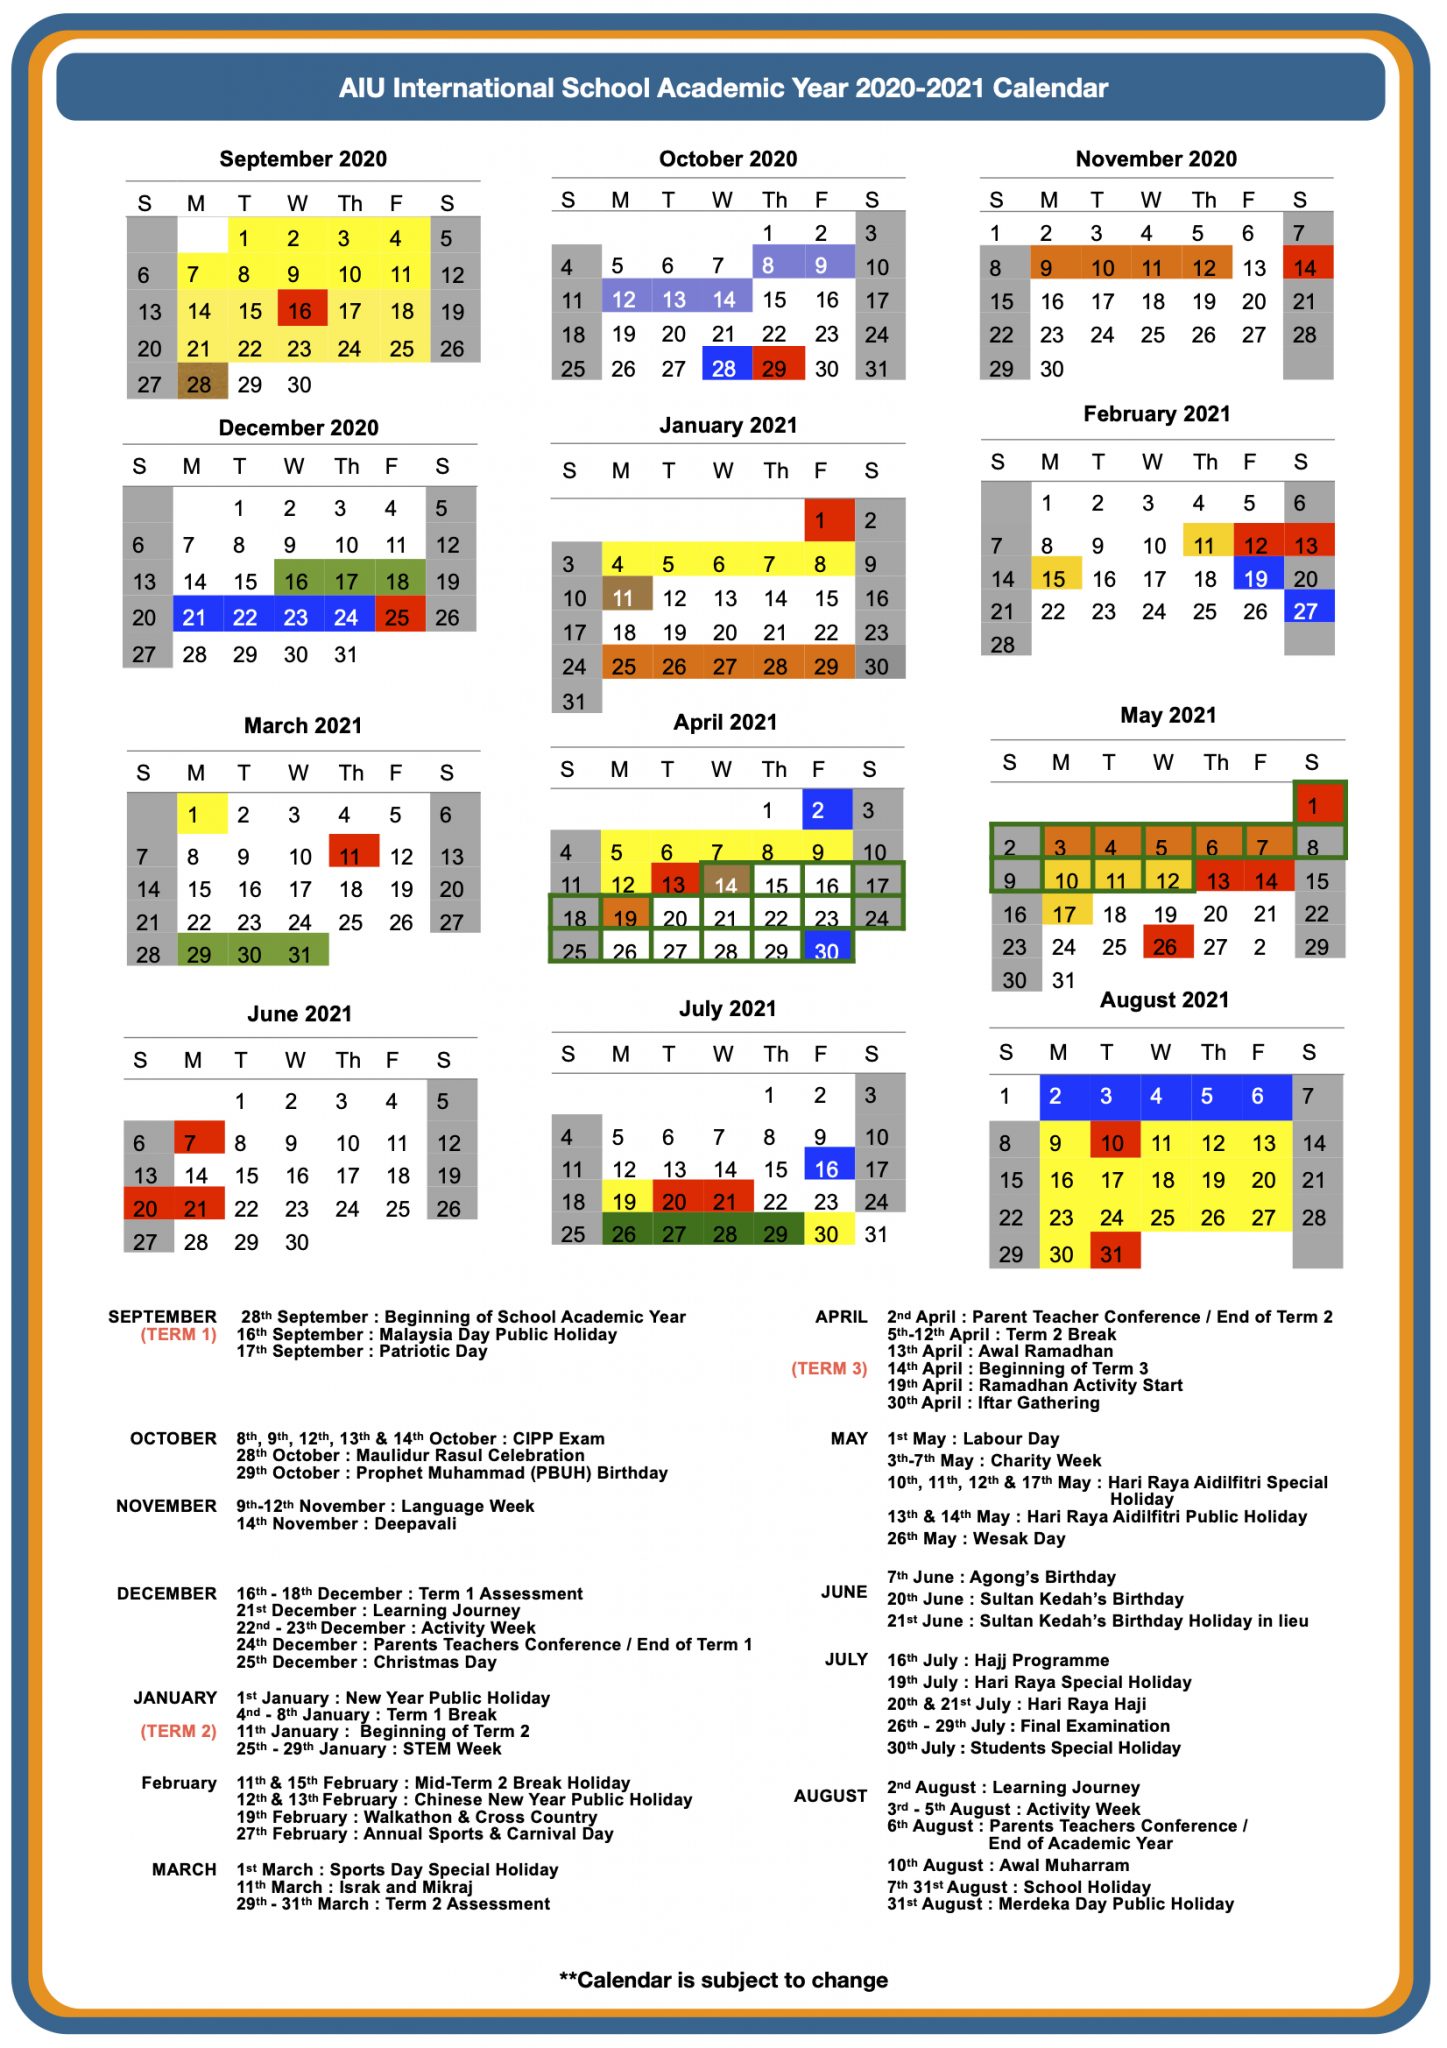 Academic Calendar - AIU International School